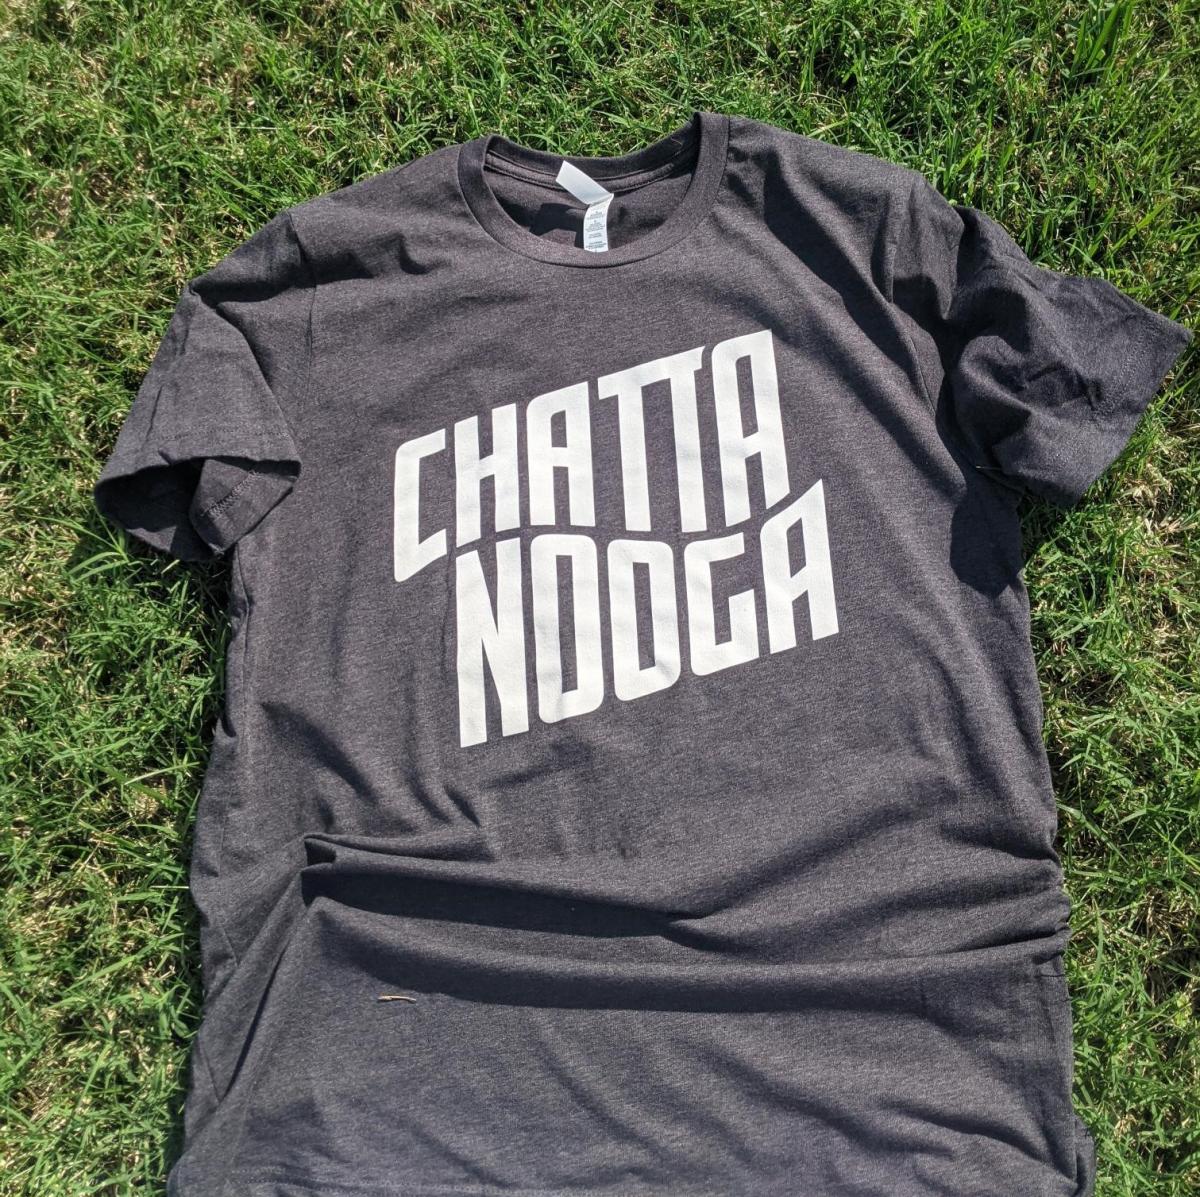 gray shirt reads CHATTANOOGA